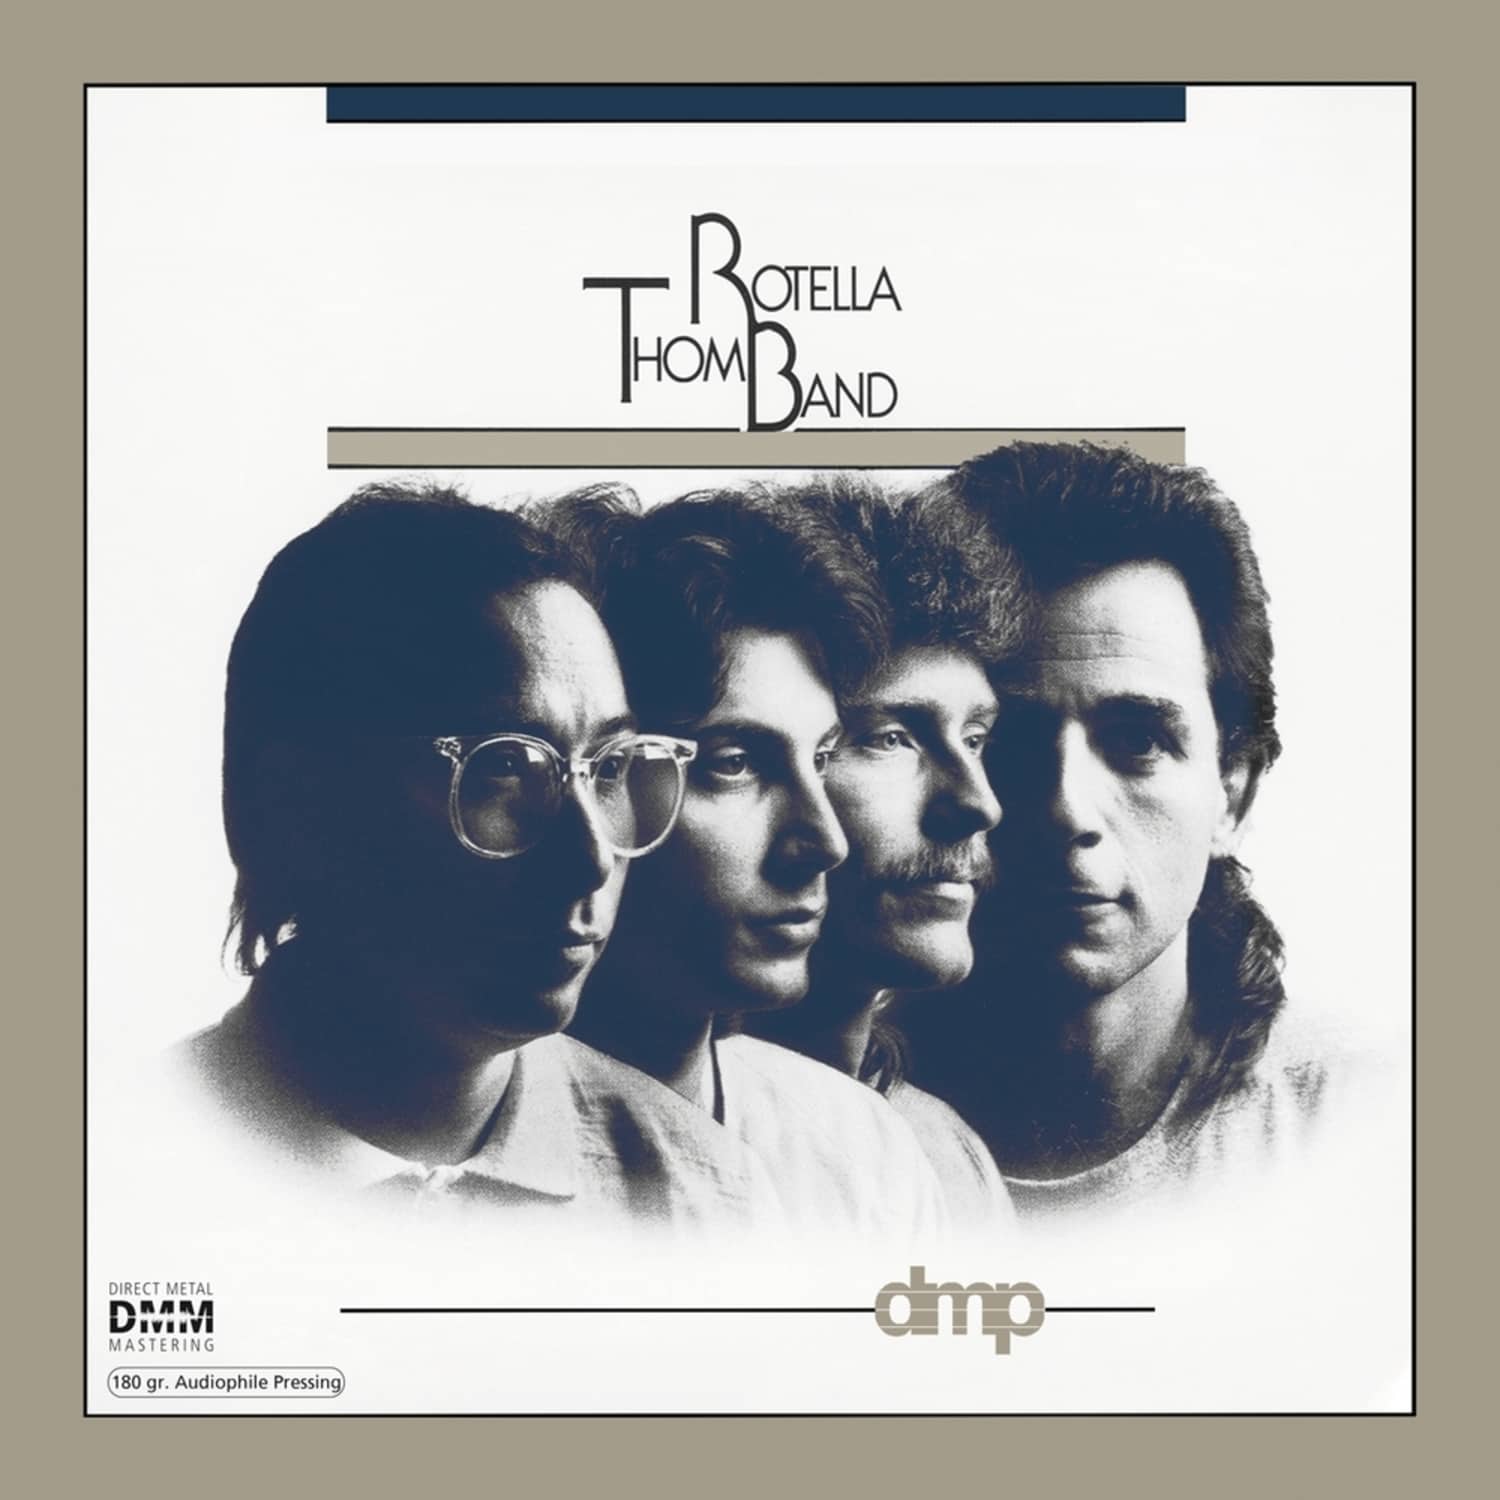 Thom Band Rotella - THOM ROTELLA BAND 